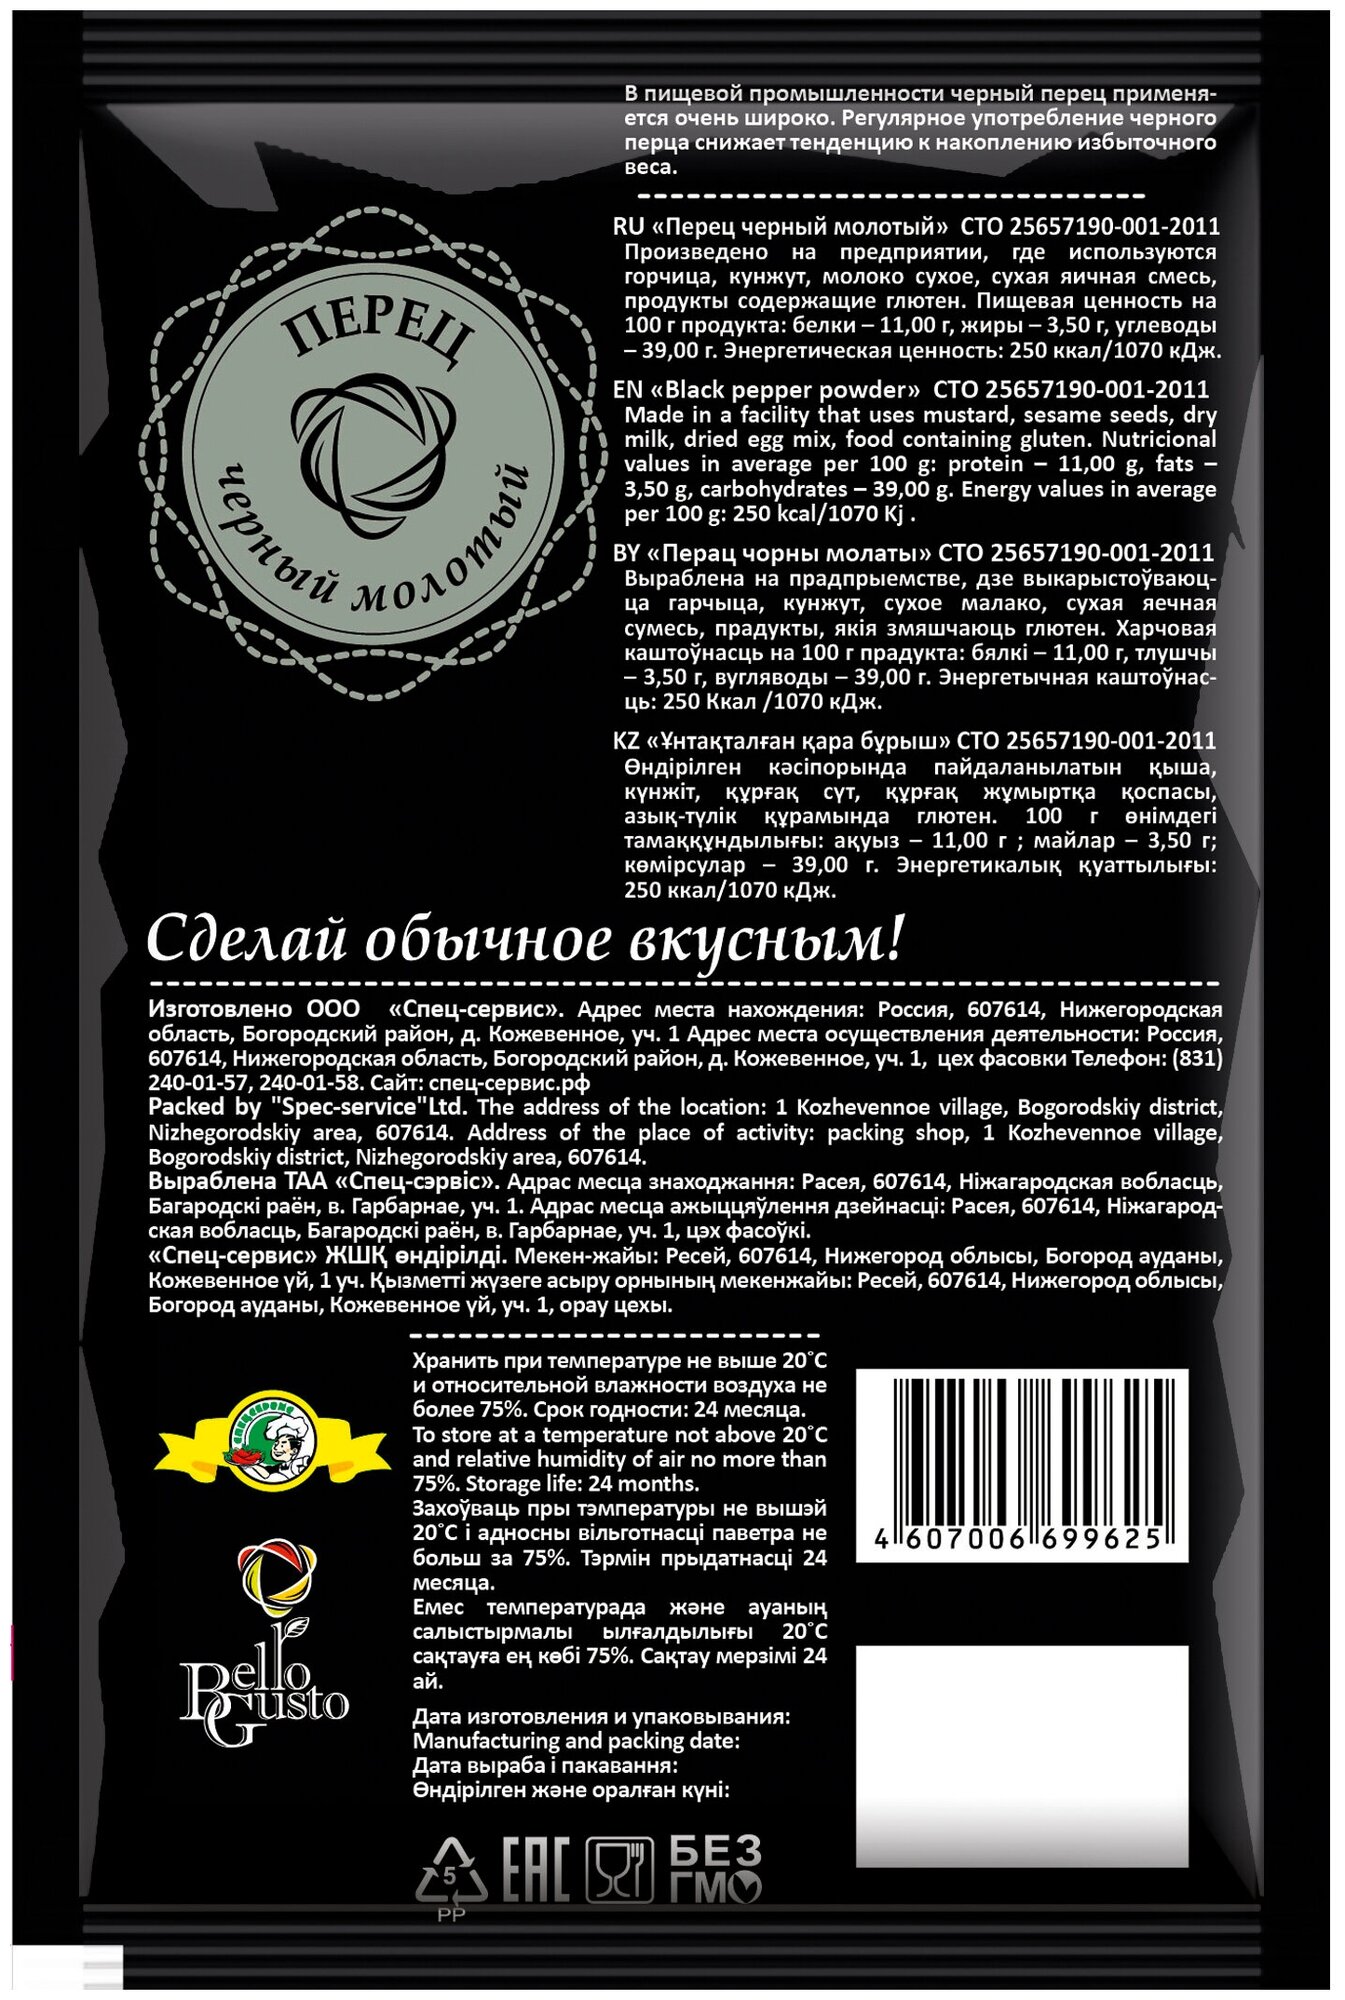 Перец чёрный молотый Bello Gusto 15 гр- 3 пакетика